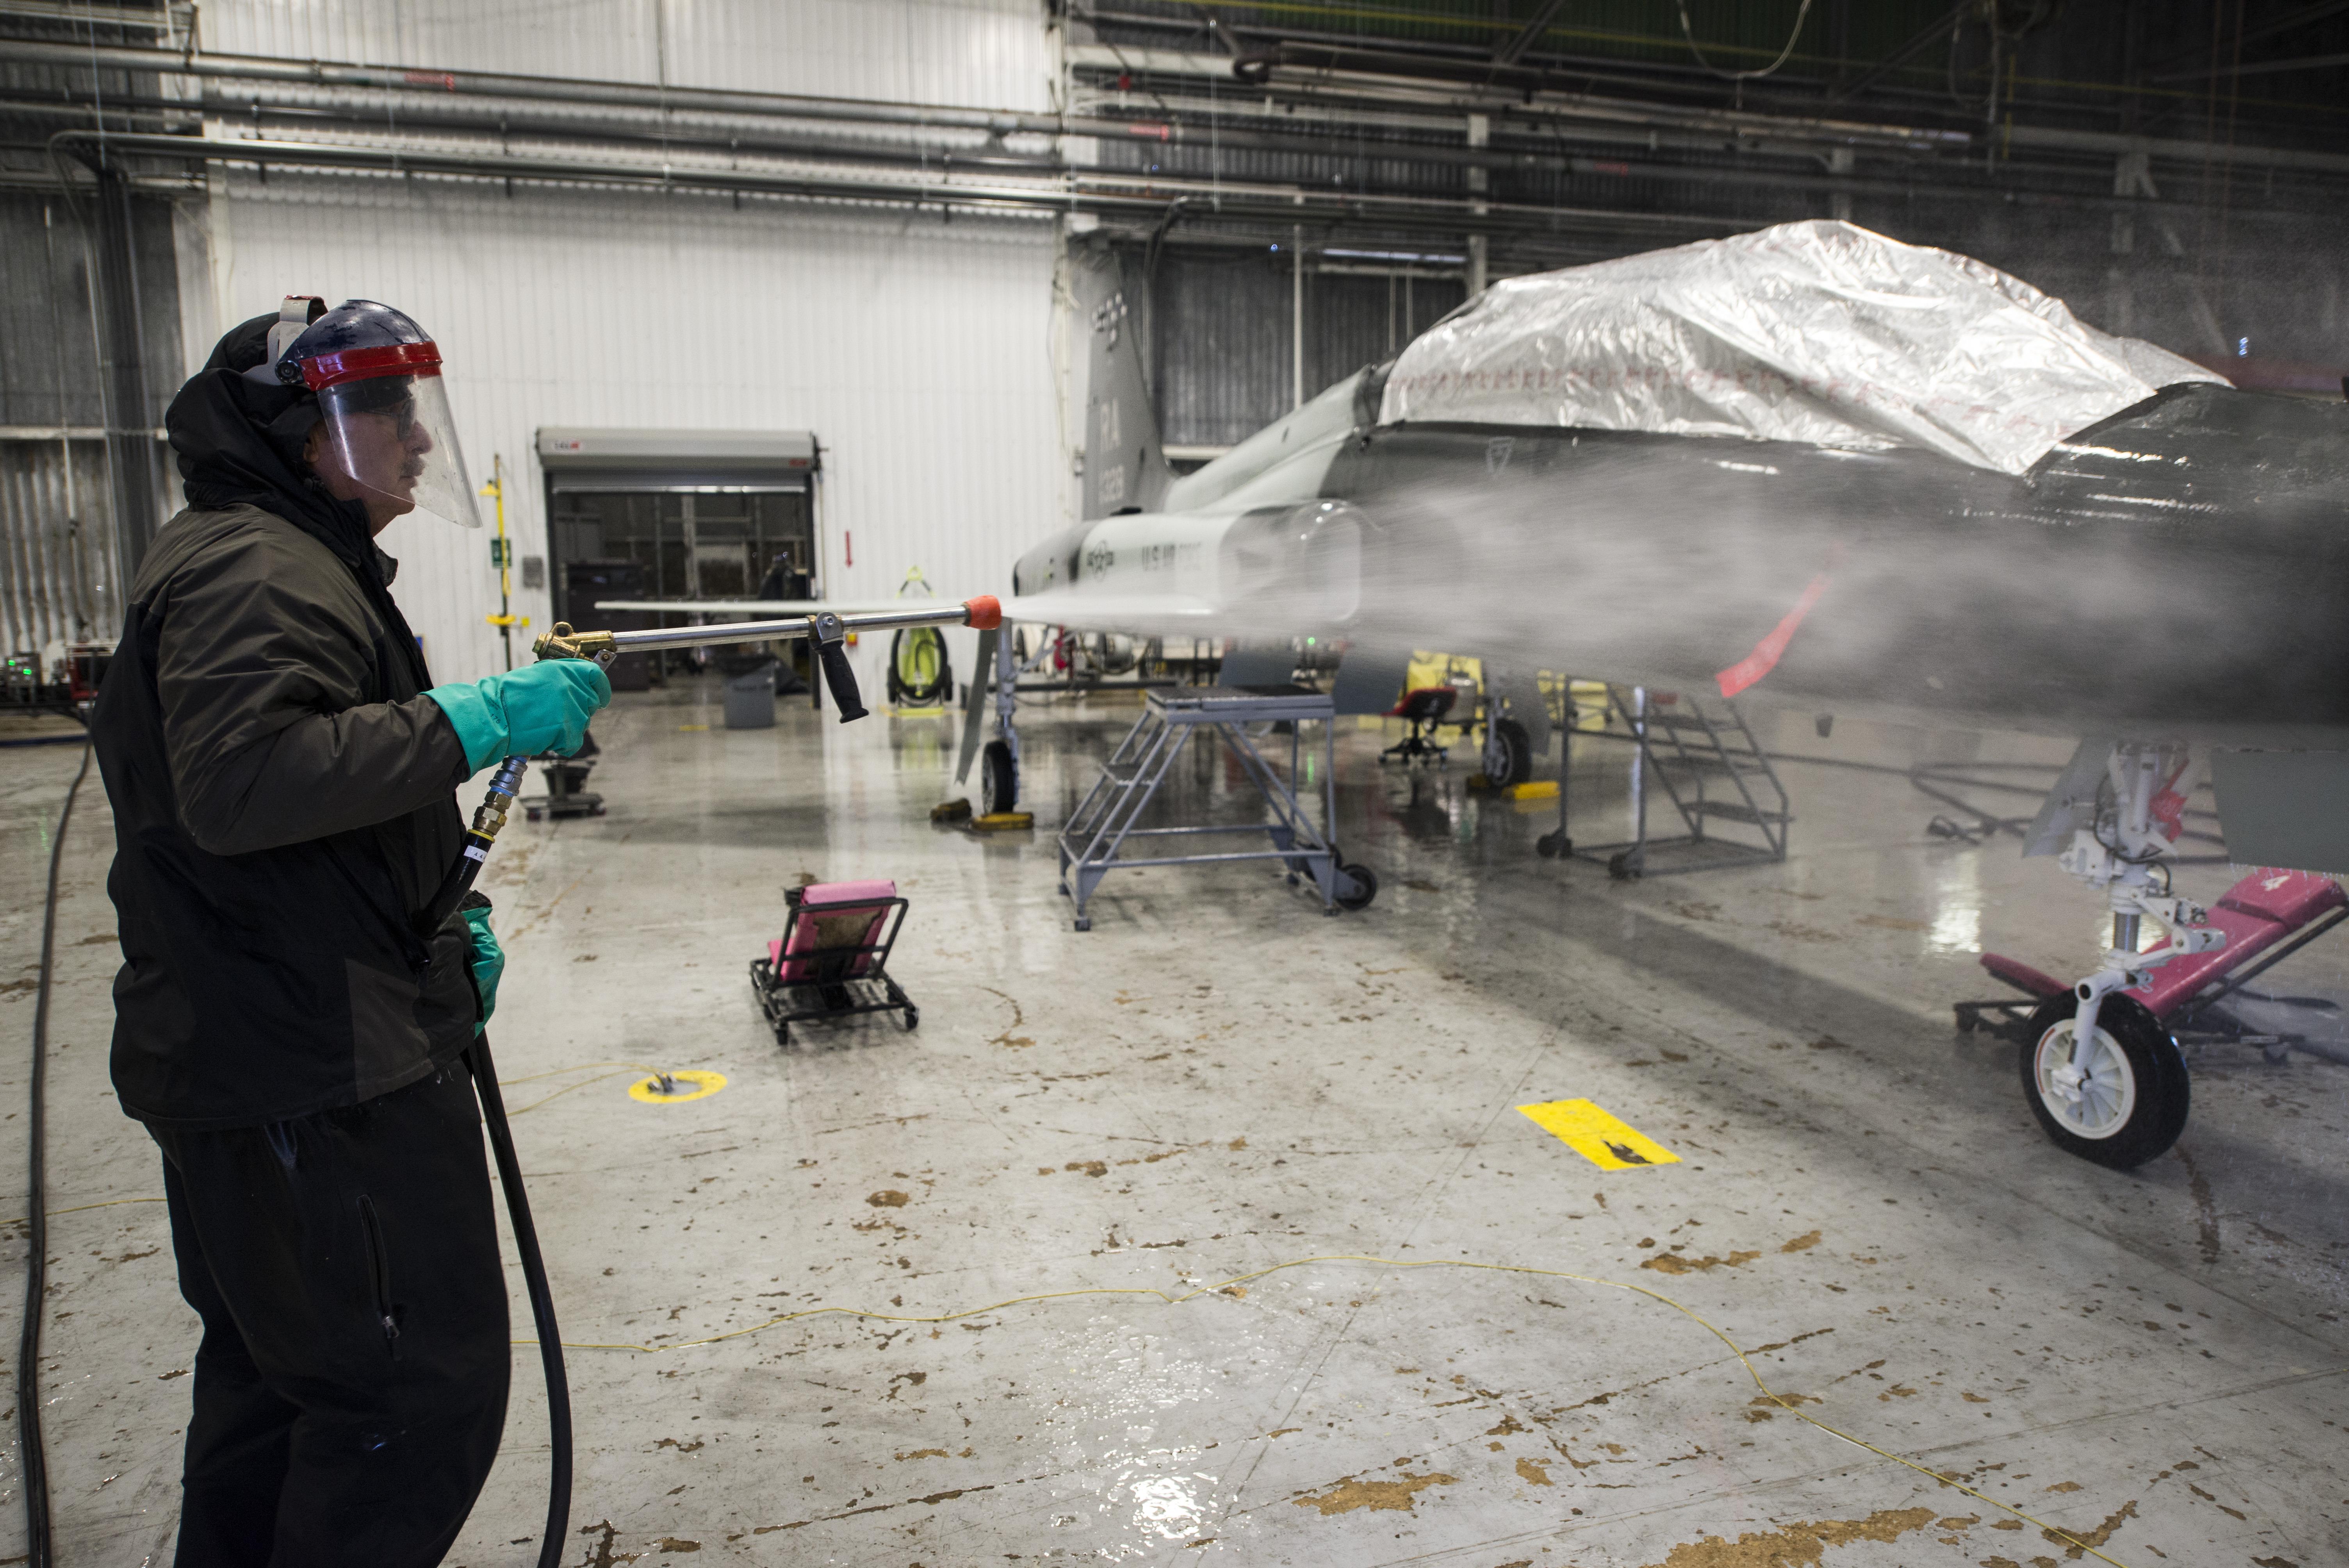 Contract Wars - USEC operators cleaning up hangar